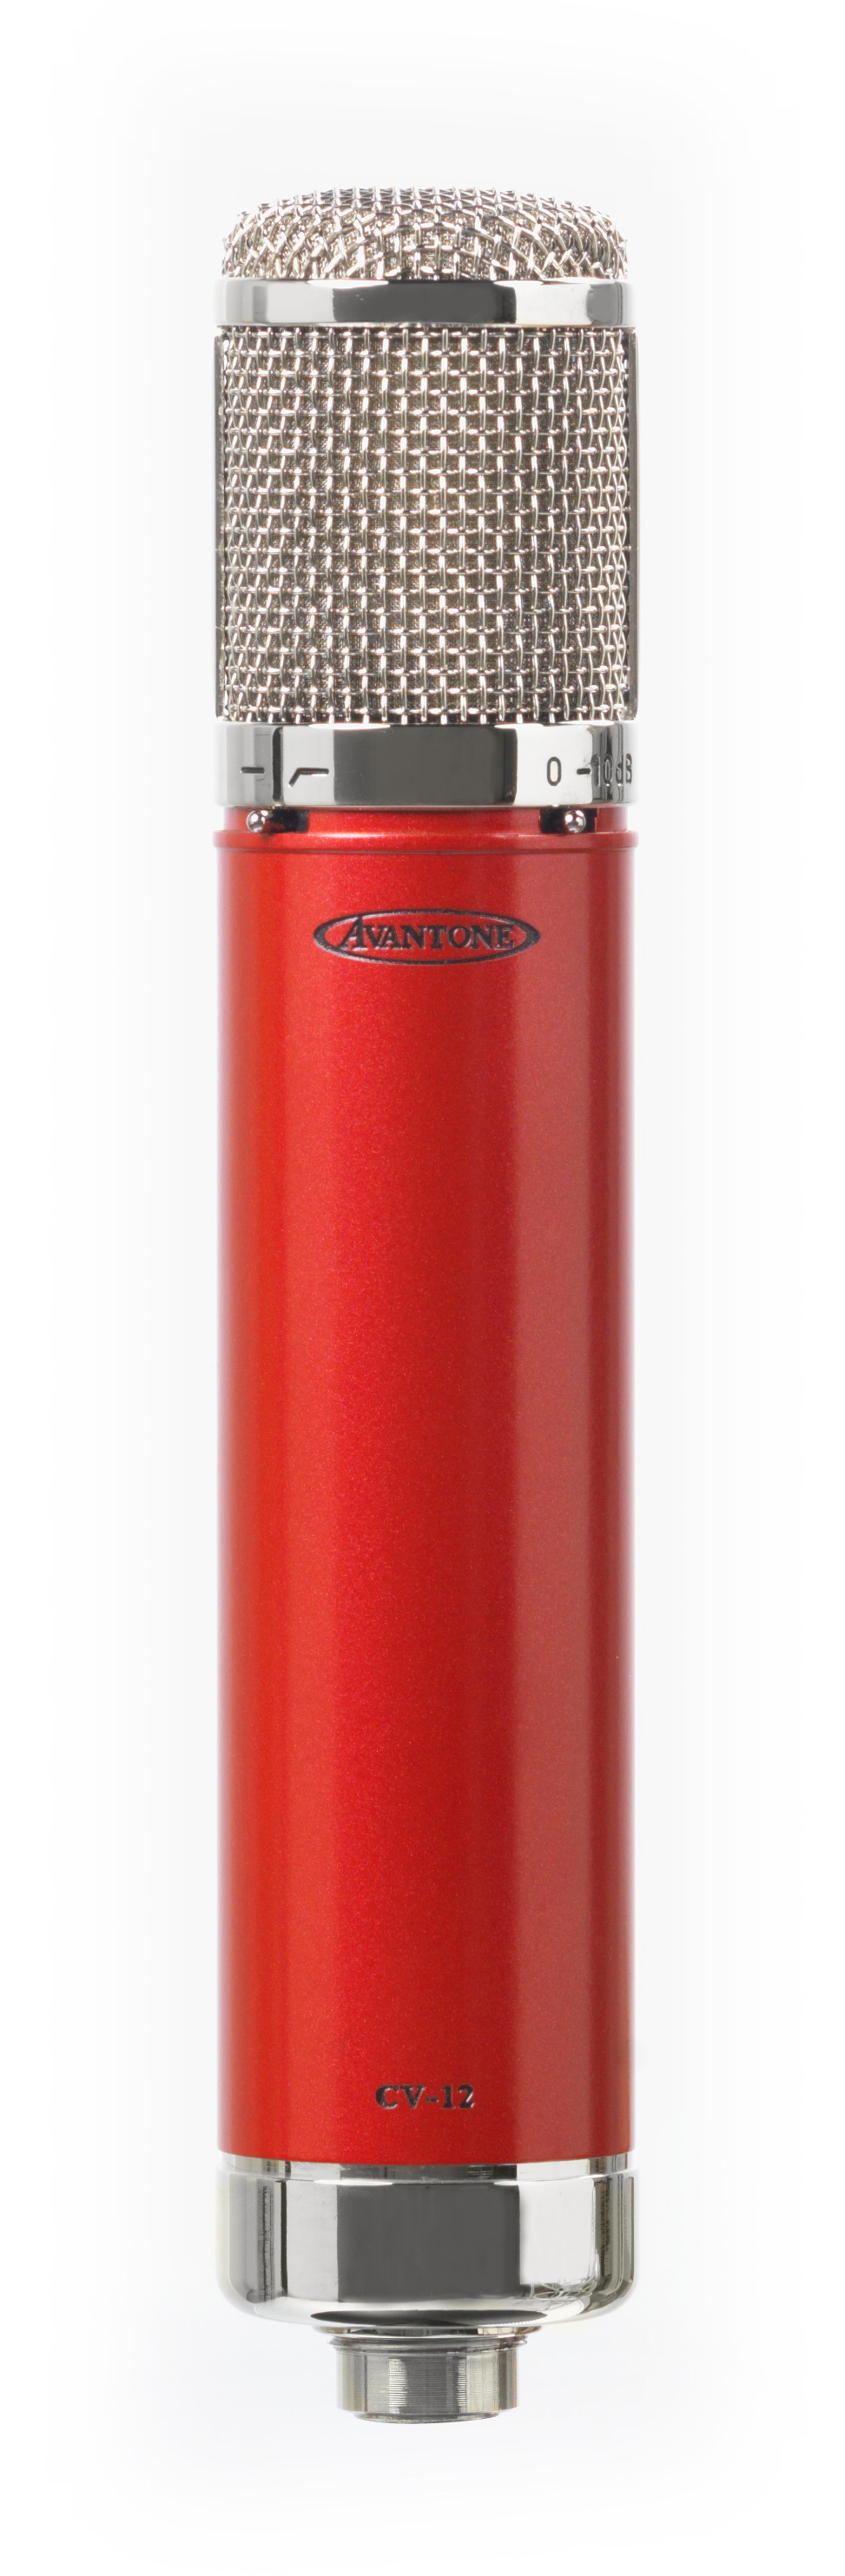 Avantone Pro Avantone CV-12 Condenser Microphone, Large Diaphgram